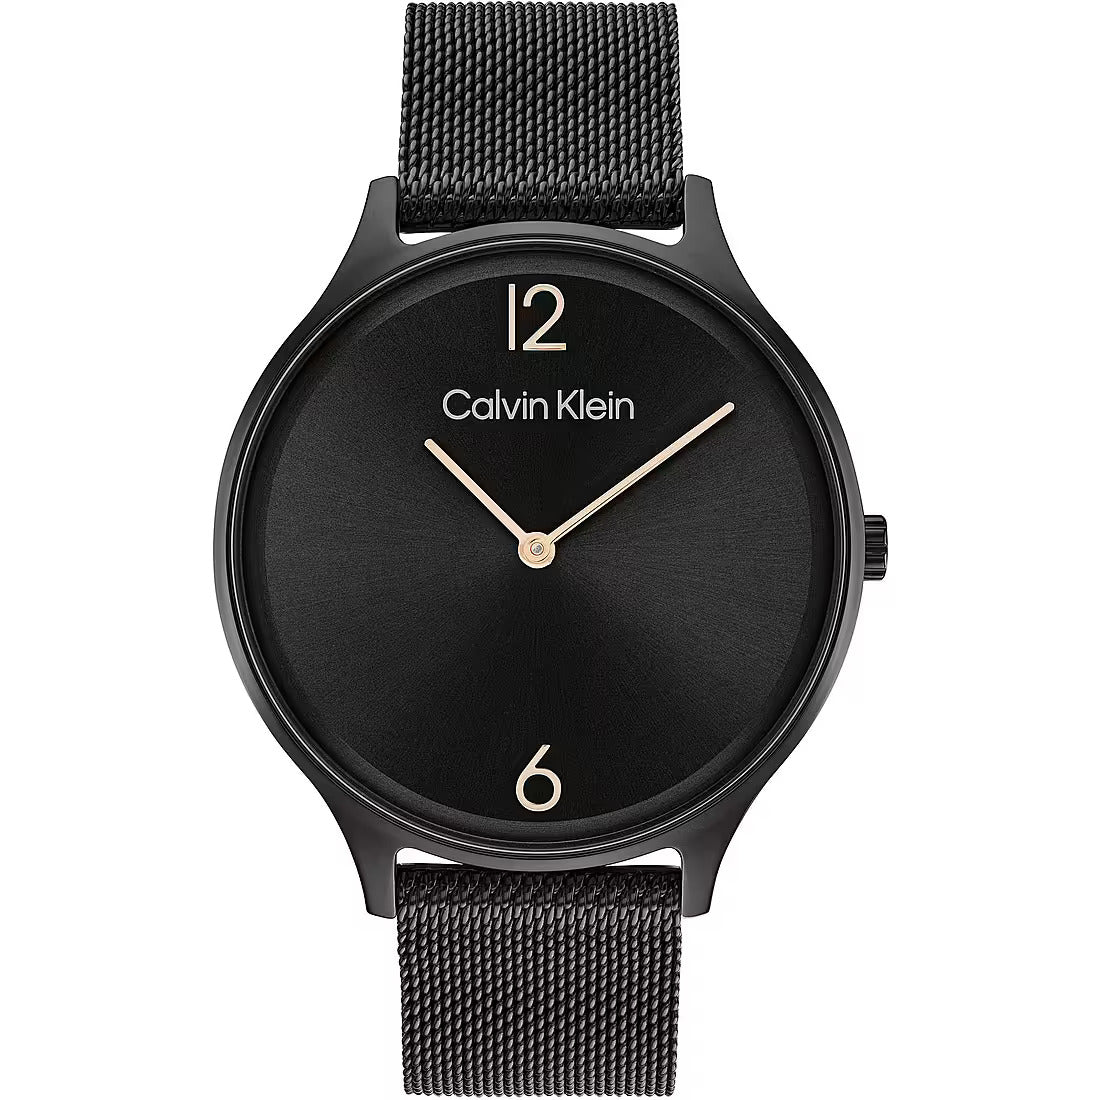 Orologio al quarzo Calvin Klein imeless, 38 mm, modello TOTAL BLACK - 25200004